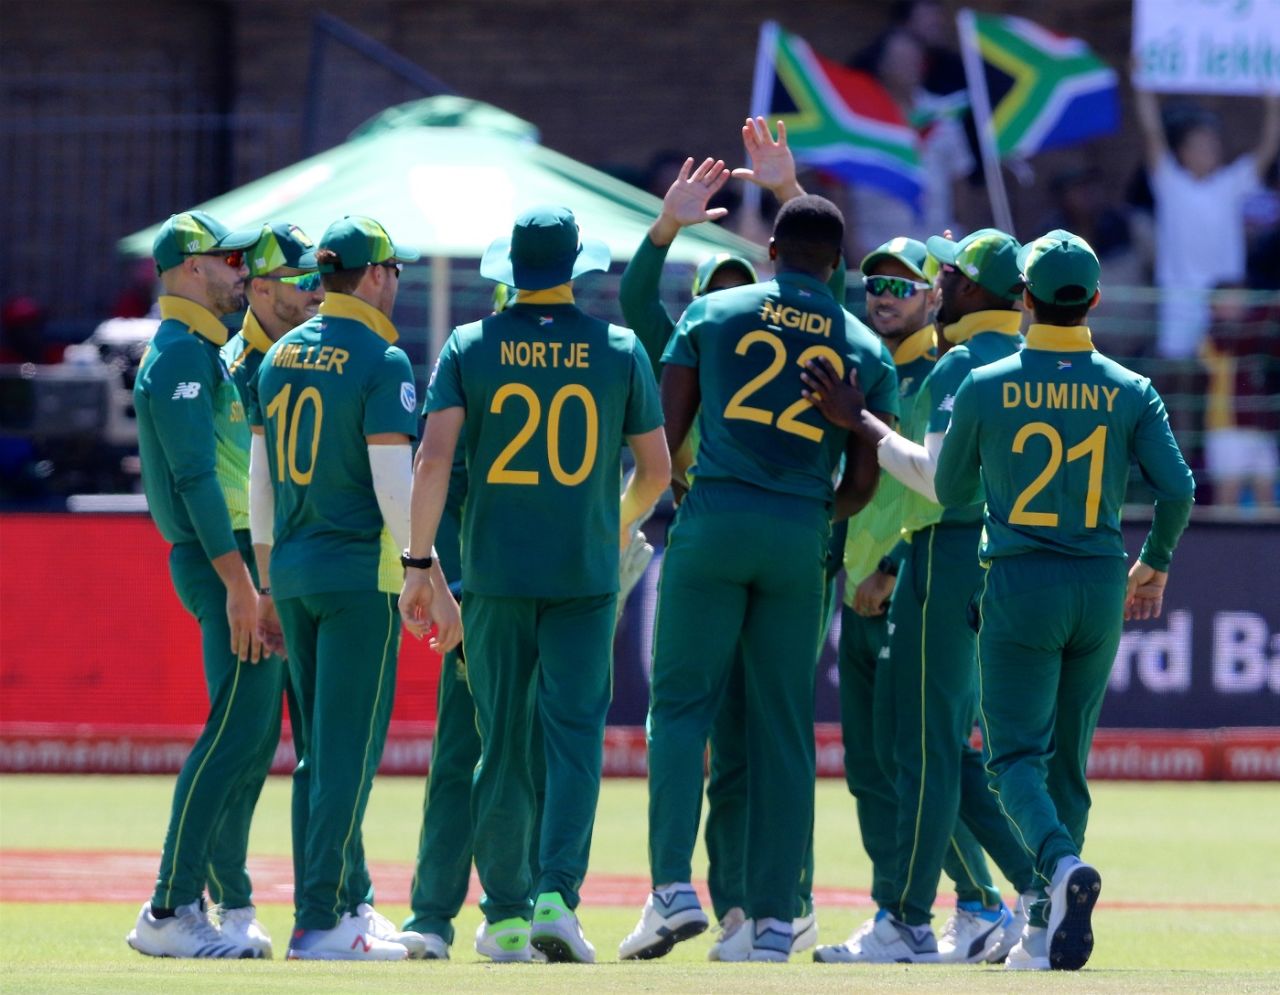 The South Africans celebrate a wicket, South Africa v Sri Lanka, 4th ODI, Port Elizabeth, March 13, 2019